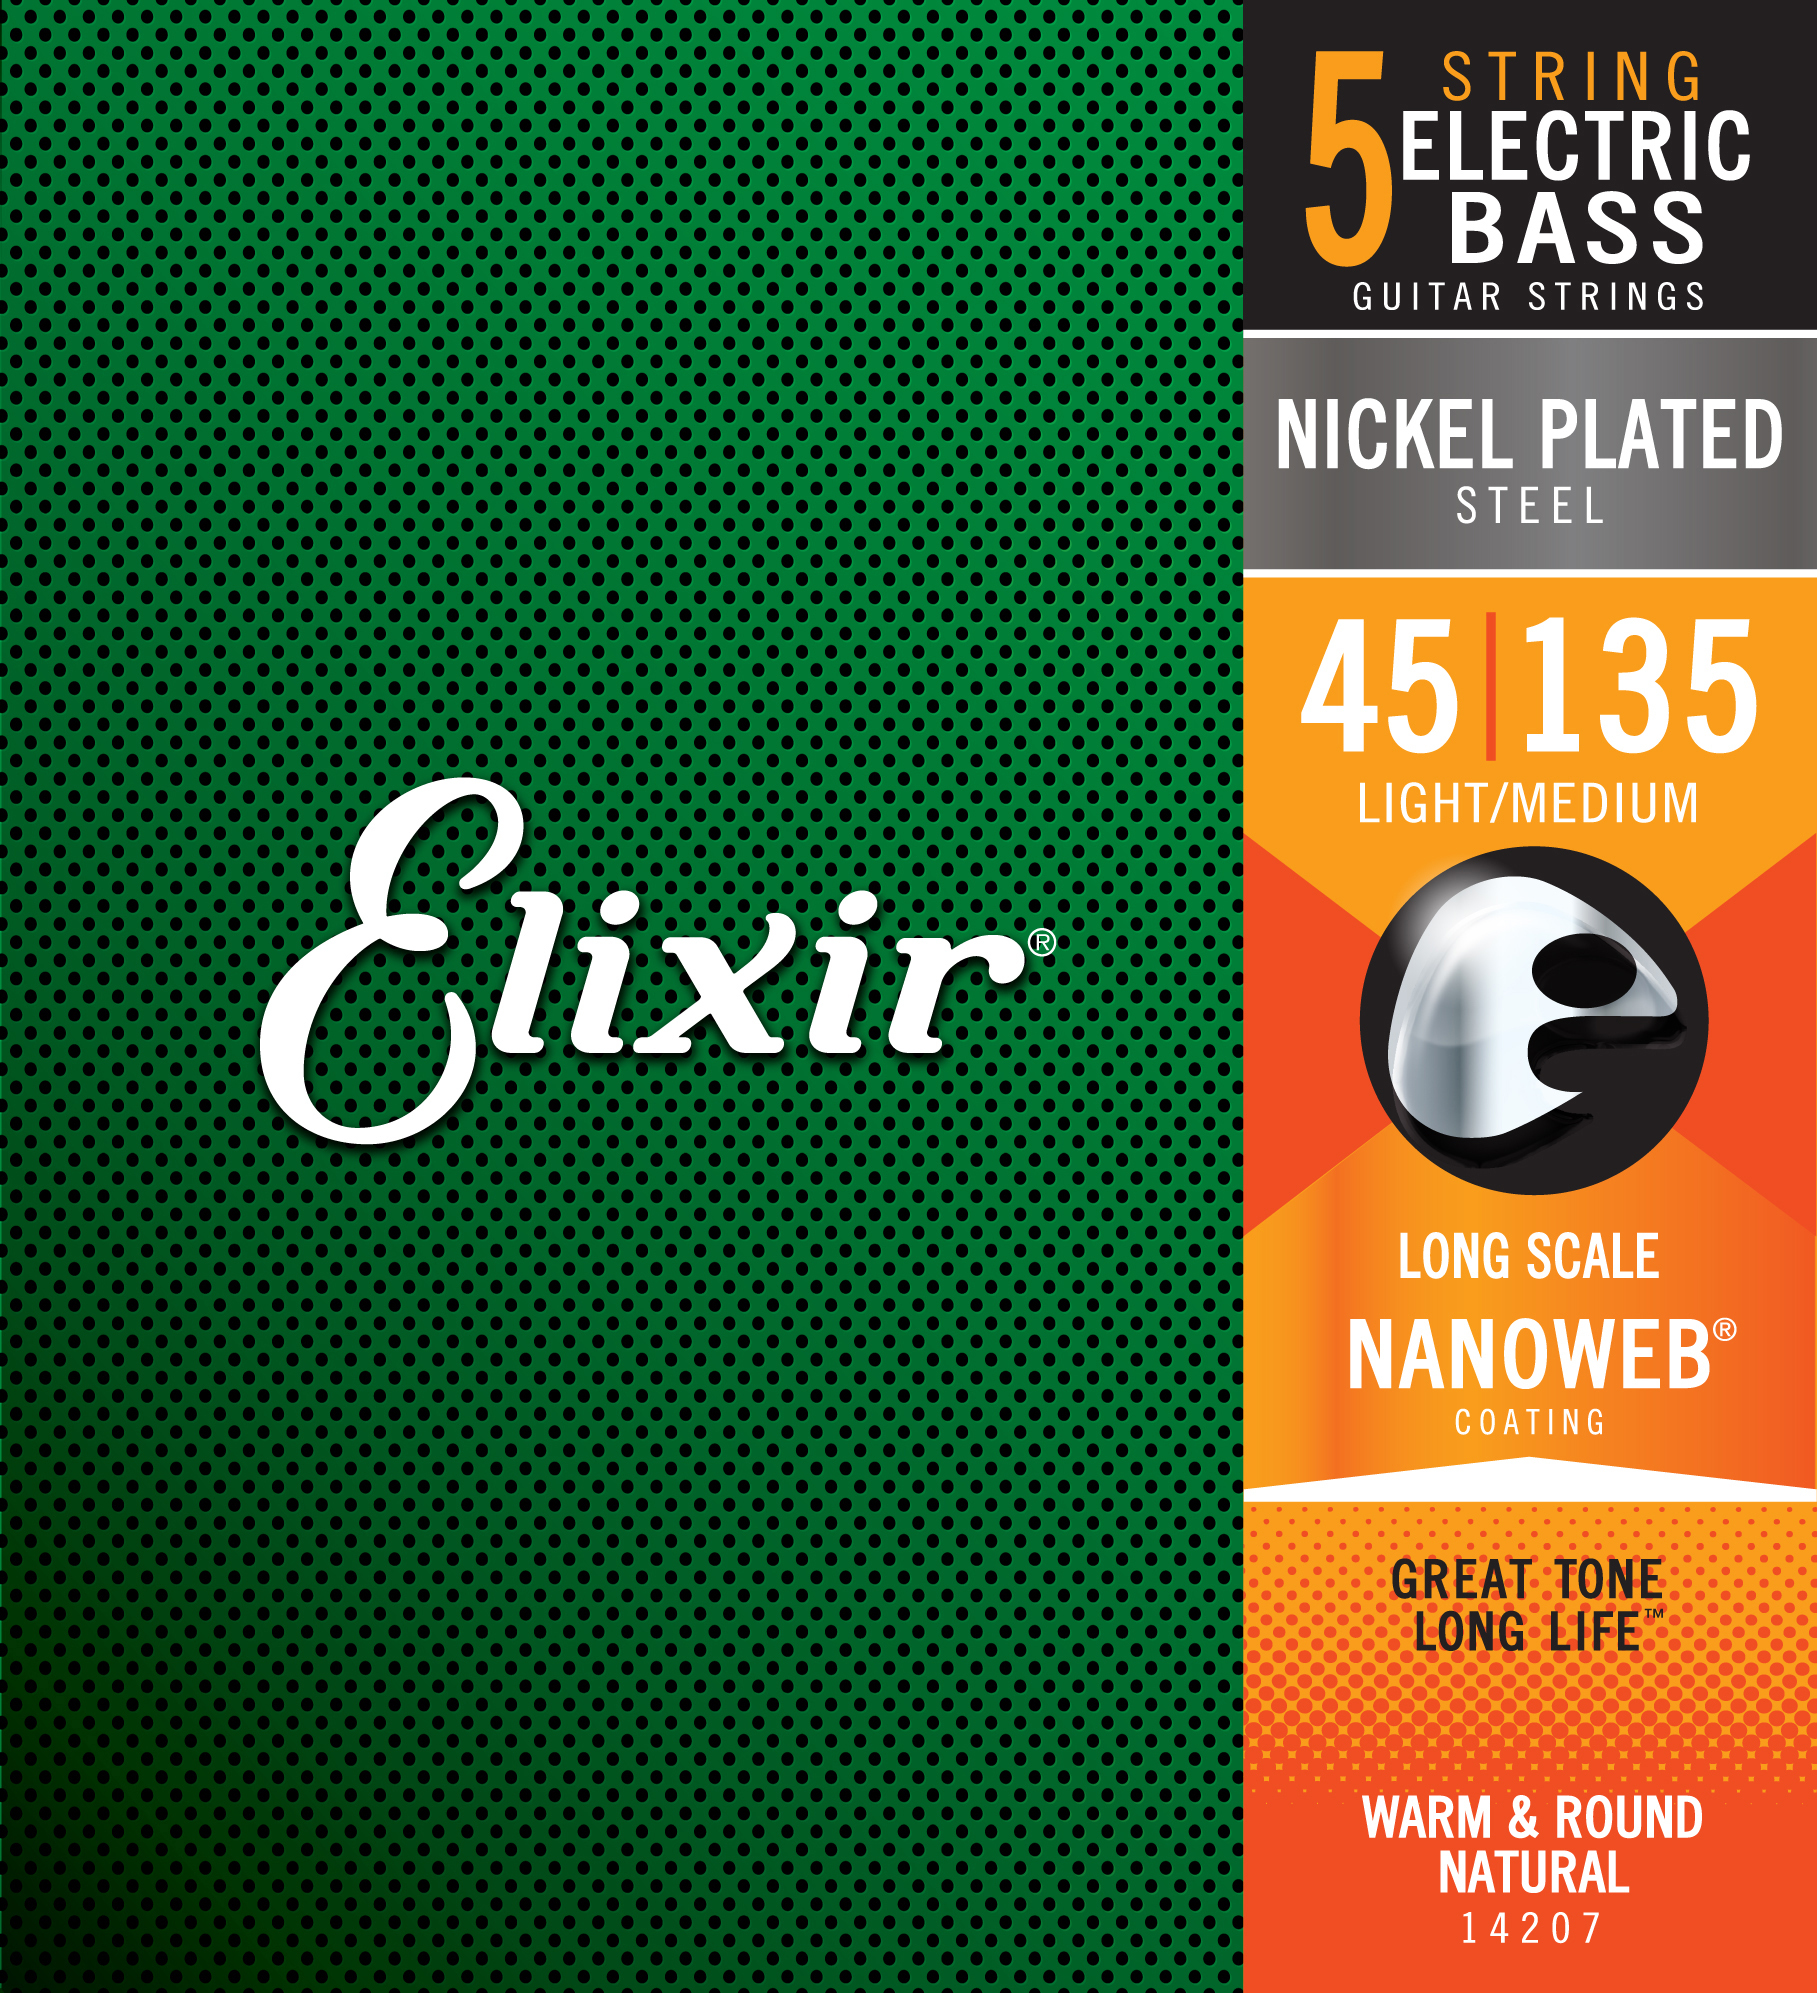 Elixir 14207 5-string Nanoweb Nps Long Scale Electric Bass 5c Light Medium 45-135 - Electric bass strings - Main picture